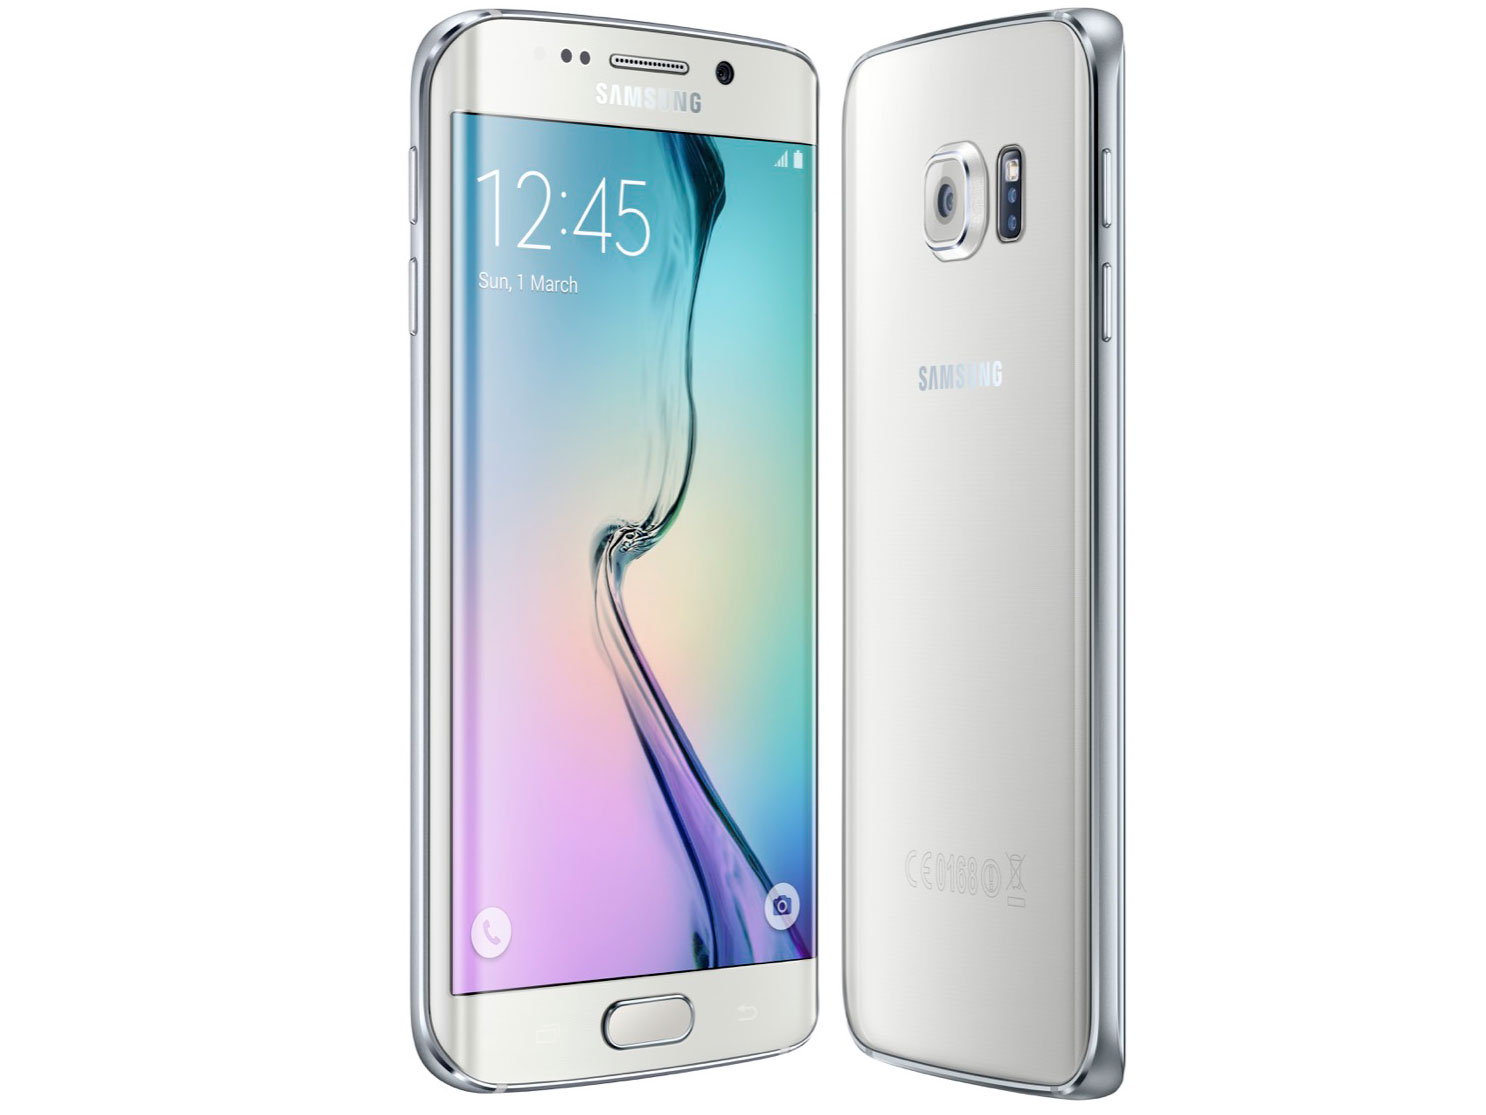 Perfecto Amoroso rojo Samsung Galaxy S6 Edge: Retested with the new DxOMark Mobile protocol -  DXOMARK